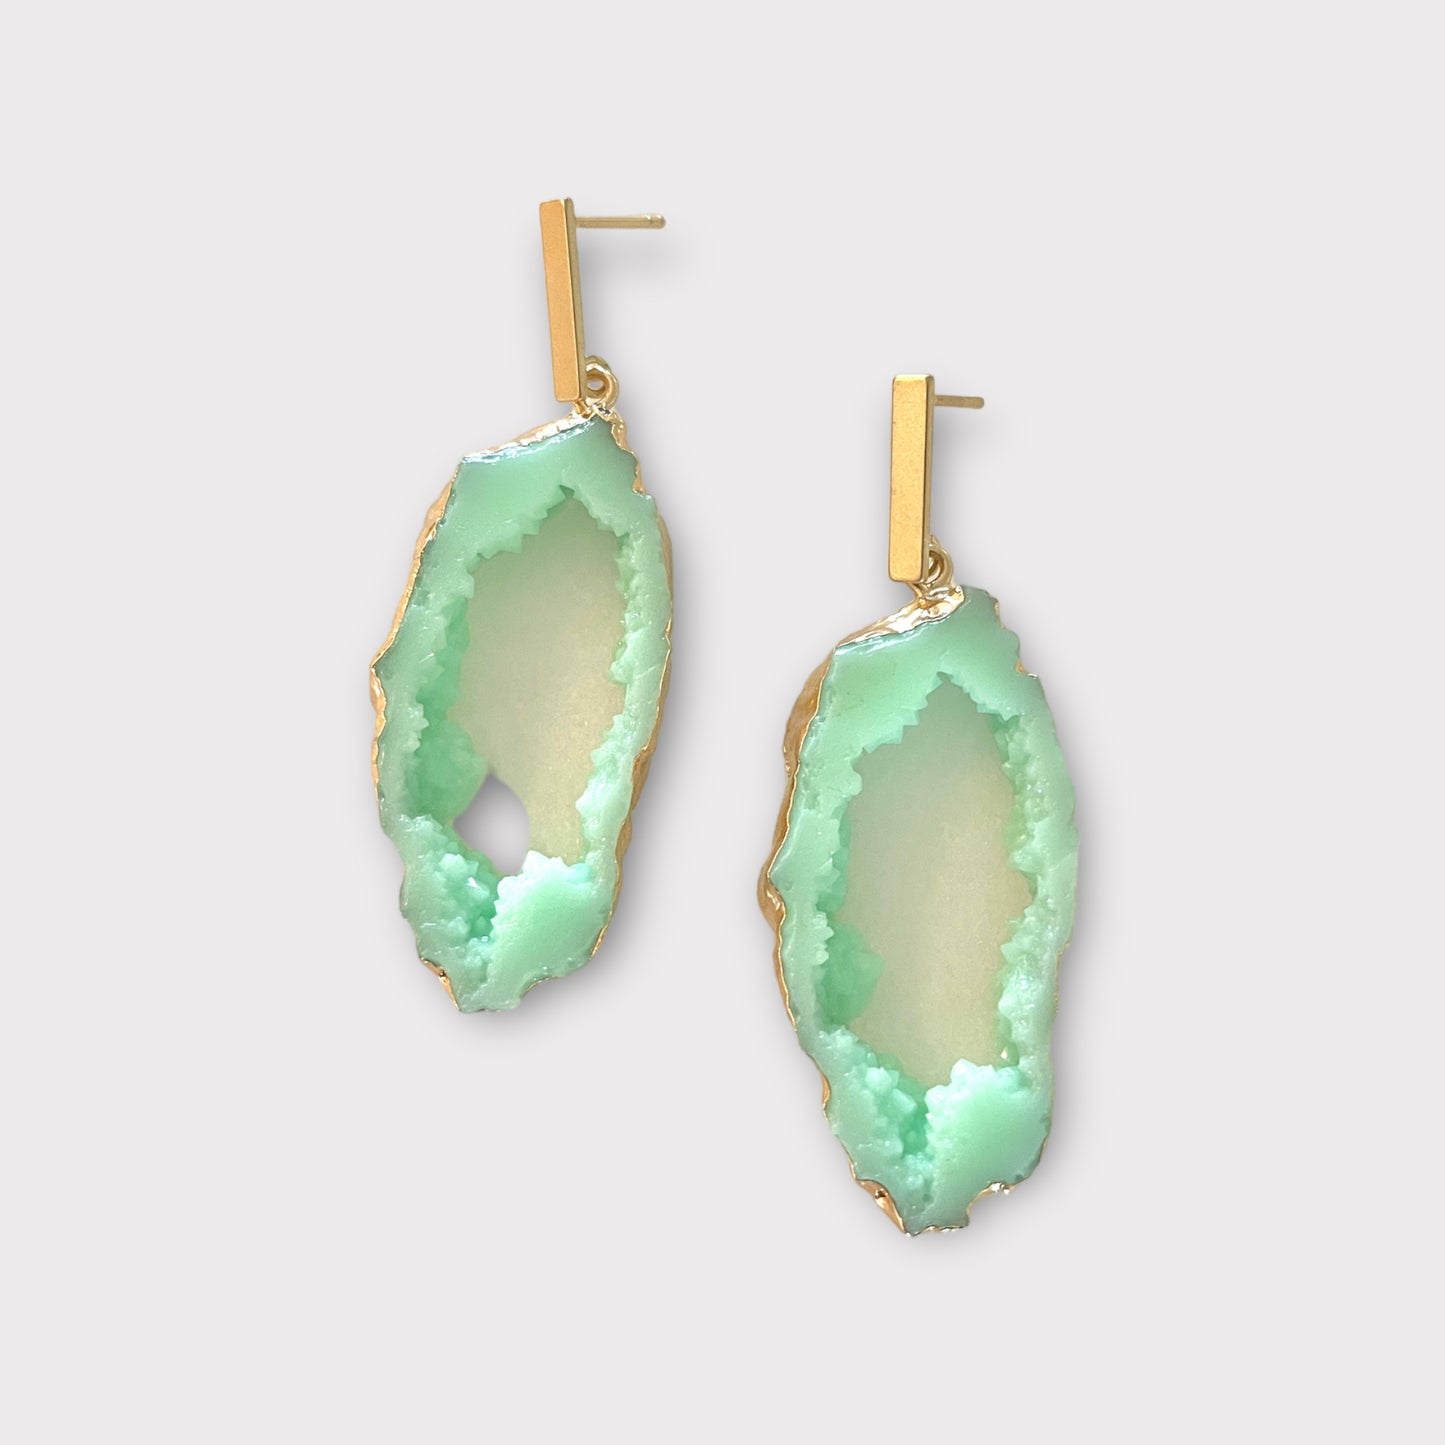 Aqua Geode Earrings